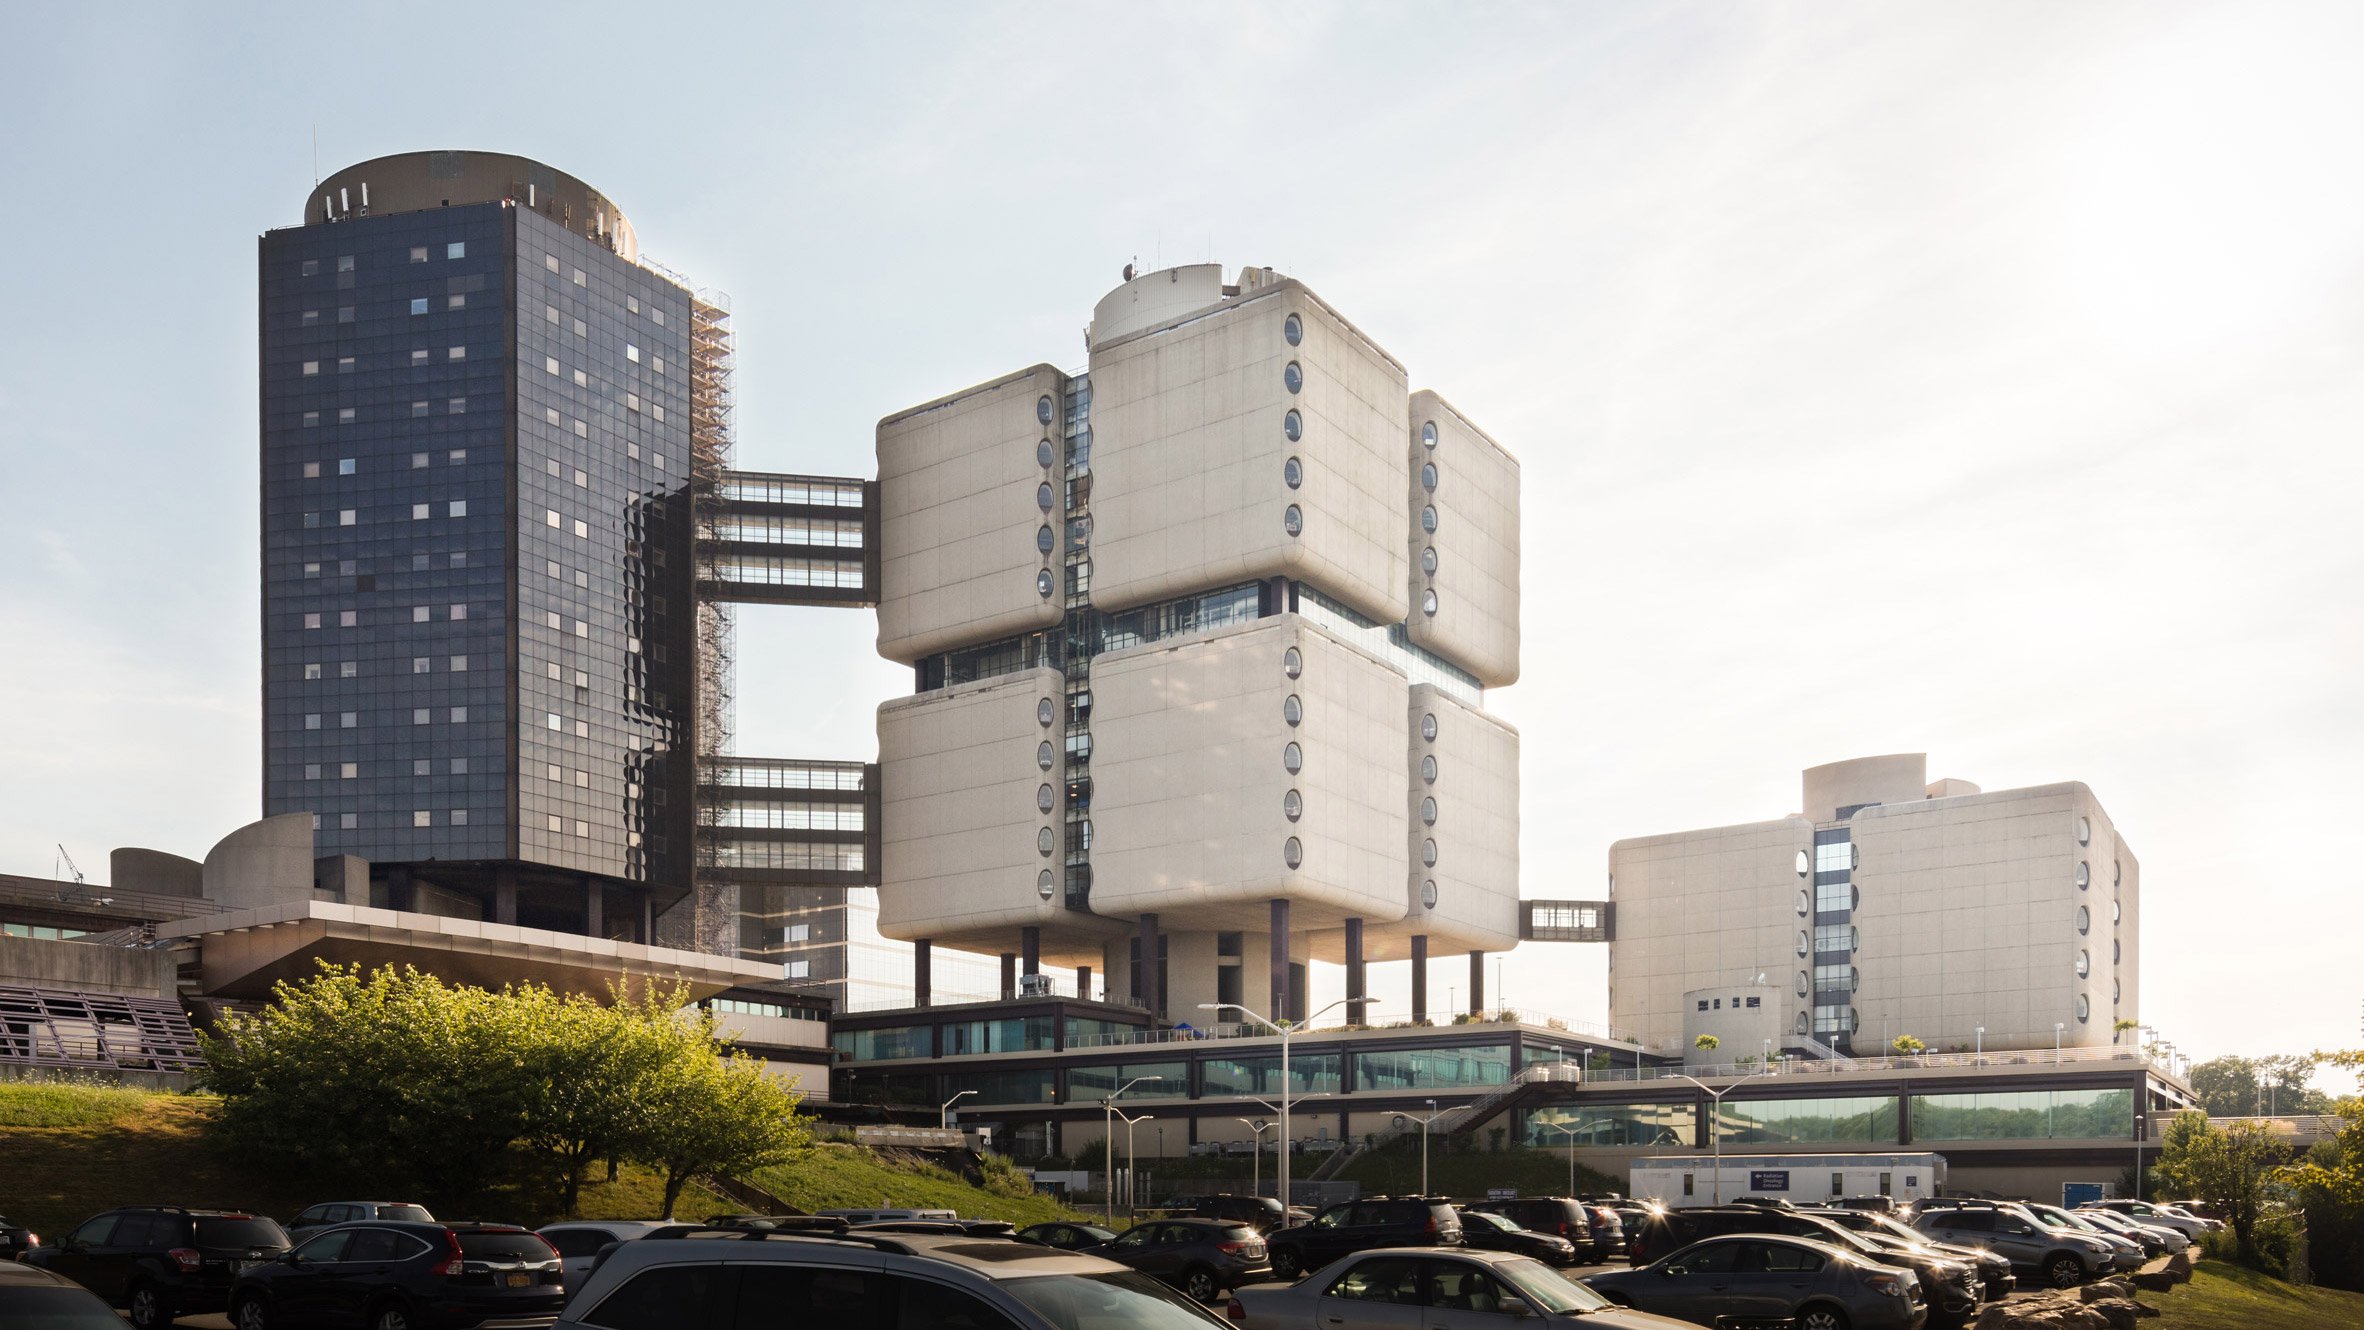 Stony Brook University Hospital by Bertrand Goldberg, Stony Brook, New York